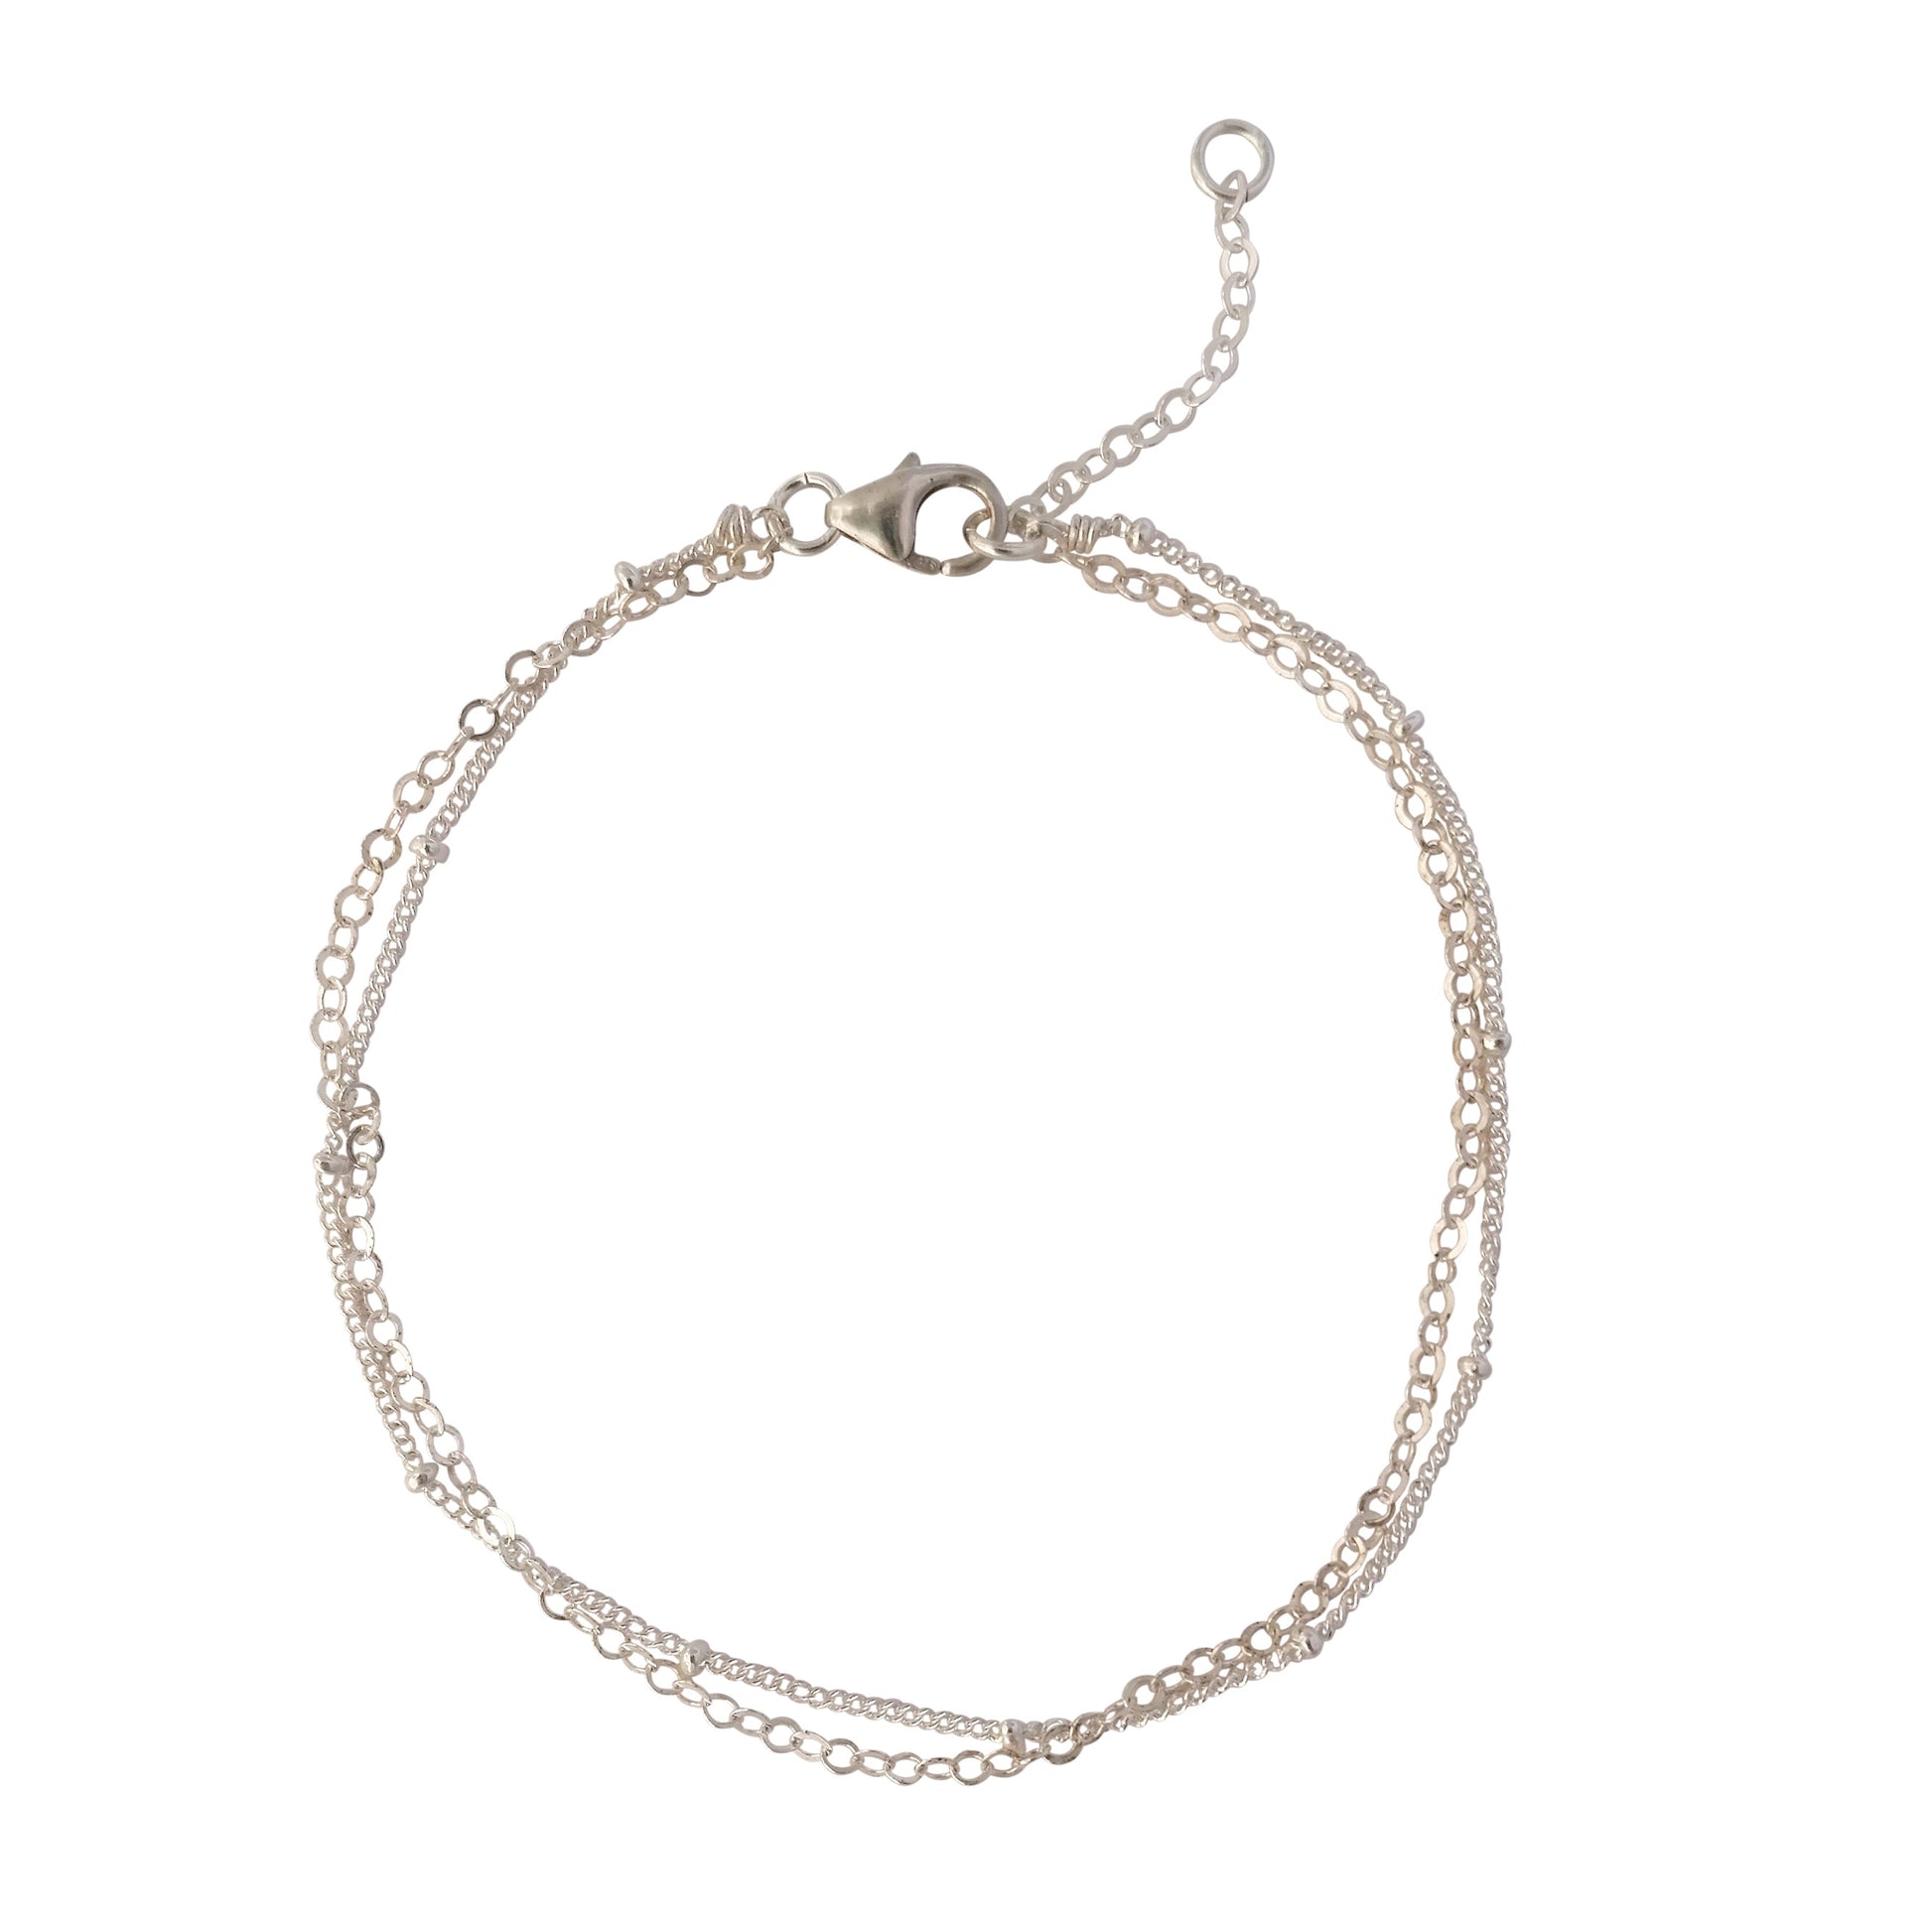 Dainty Silver Layered Chain bracelet